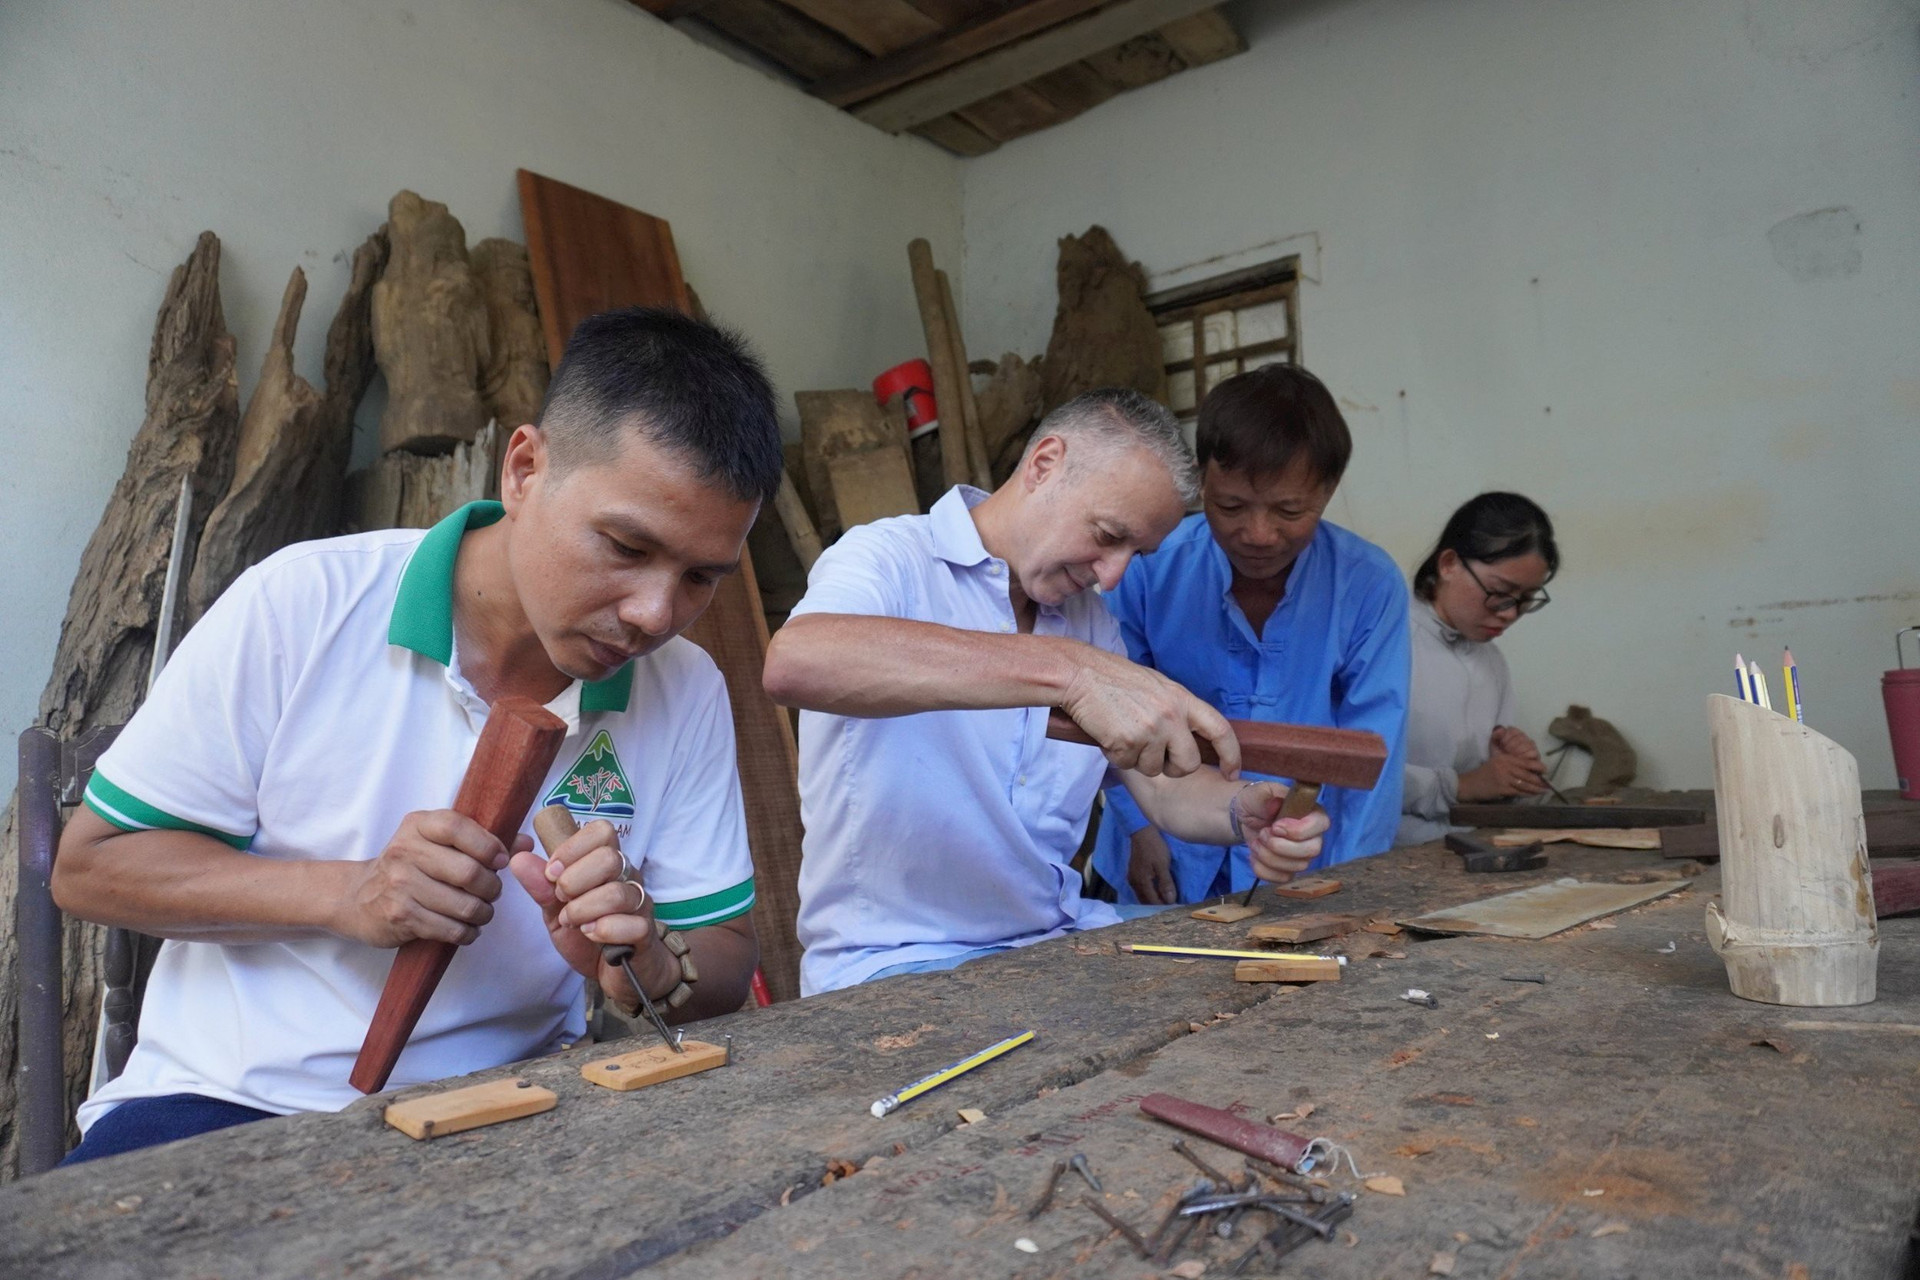 Hoi An (Quang Nam) organizes guided tours at Kim Bong carpentry village